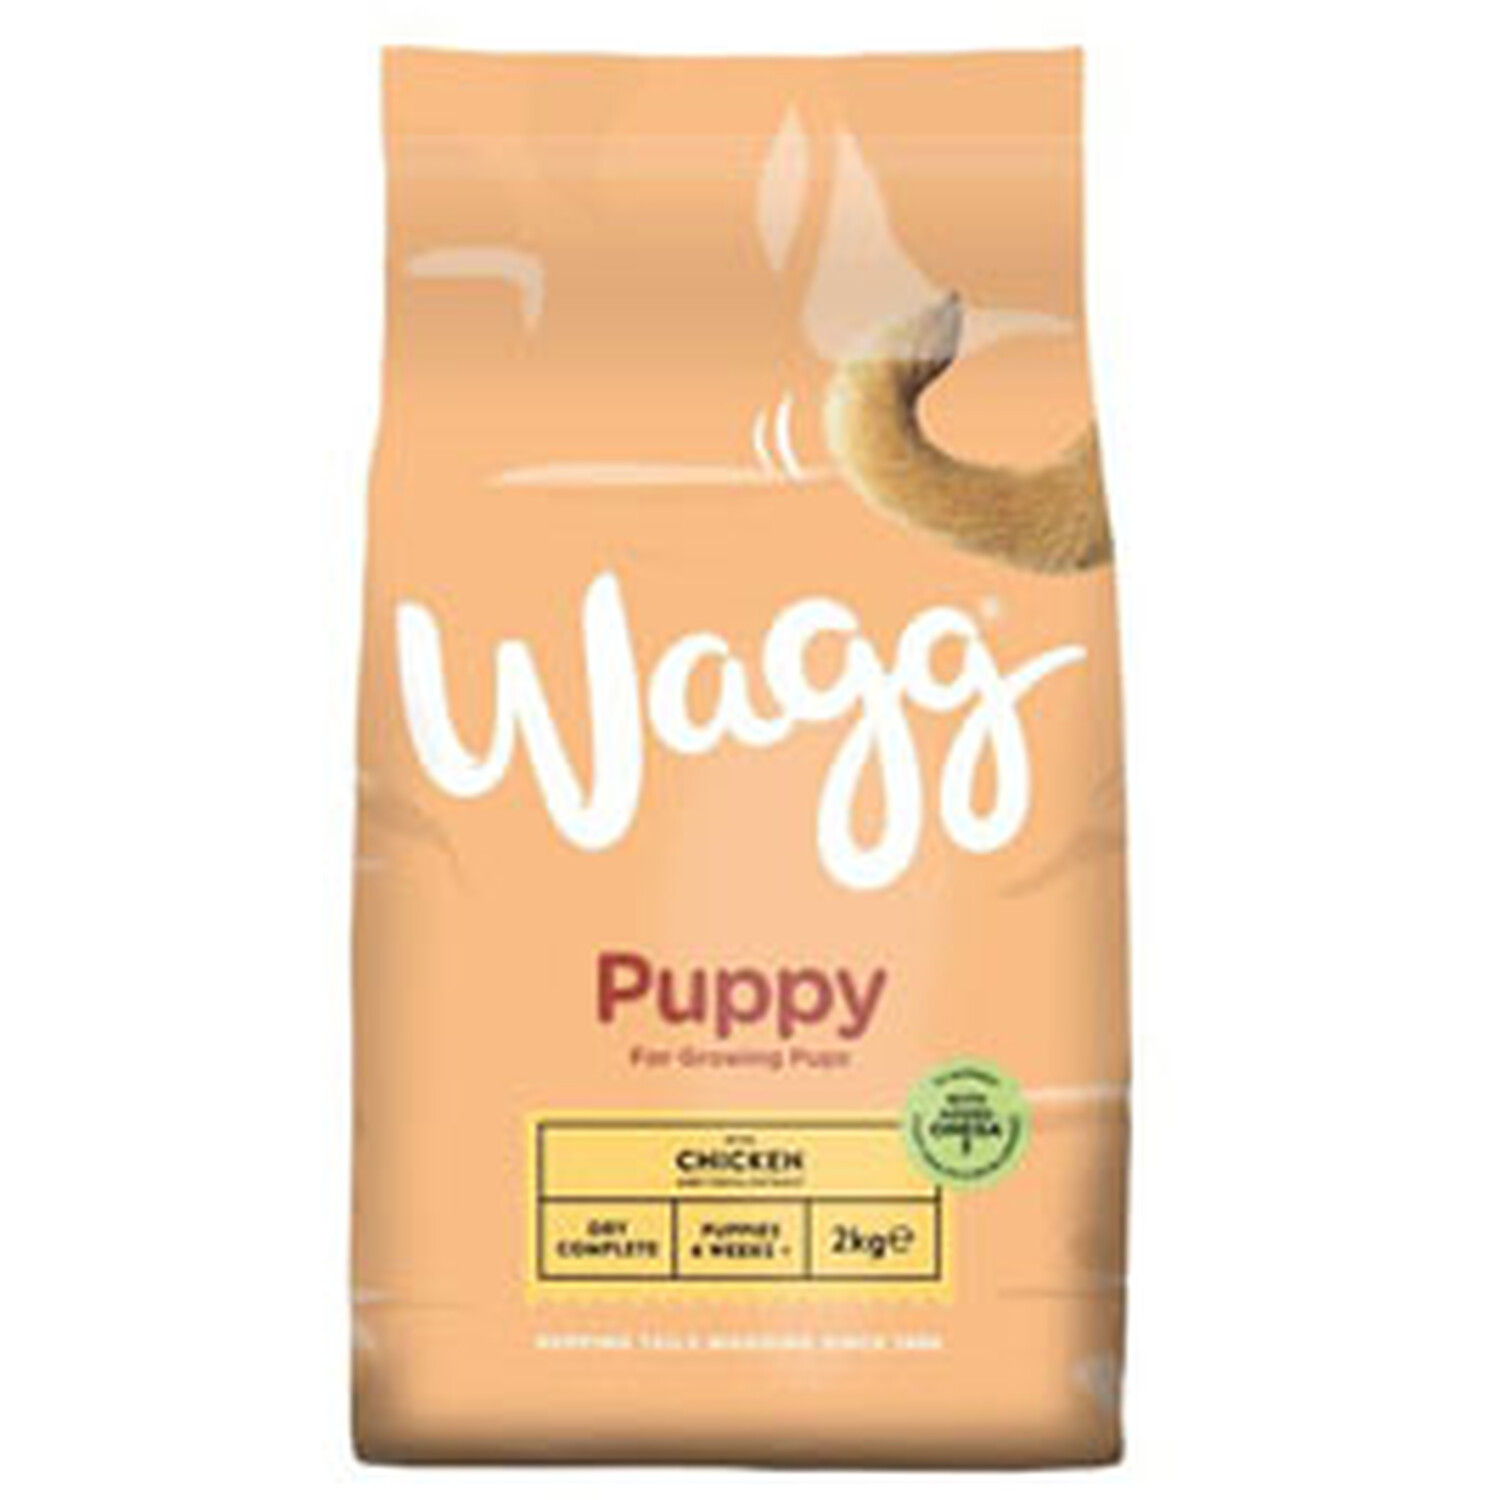 Wagg Chicken Puppy Food 2kg Image 1